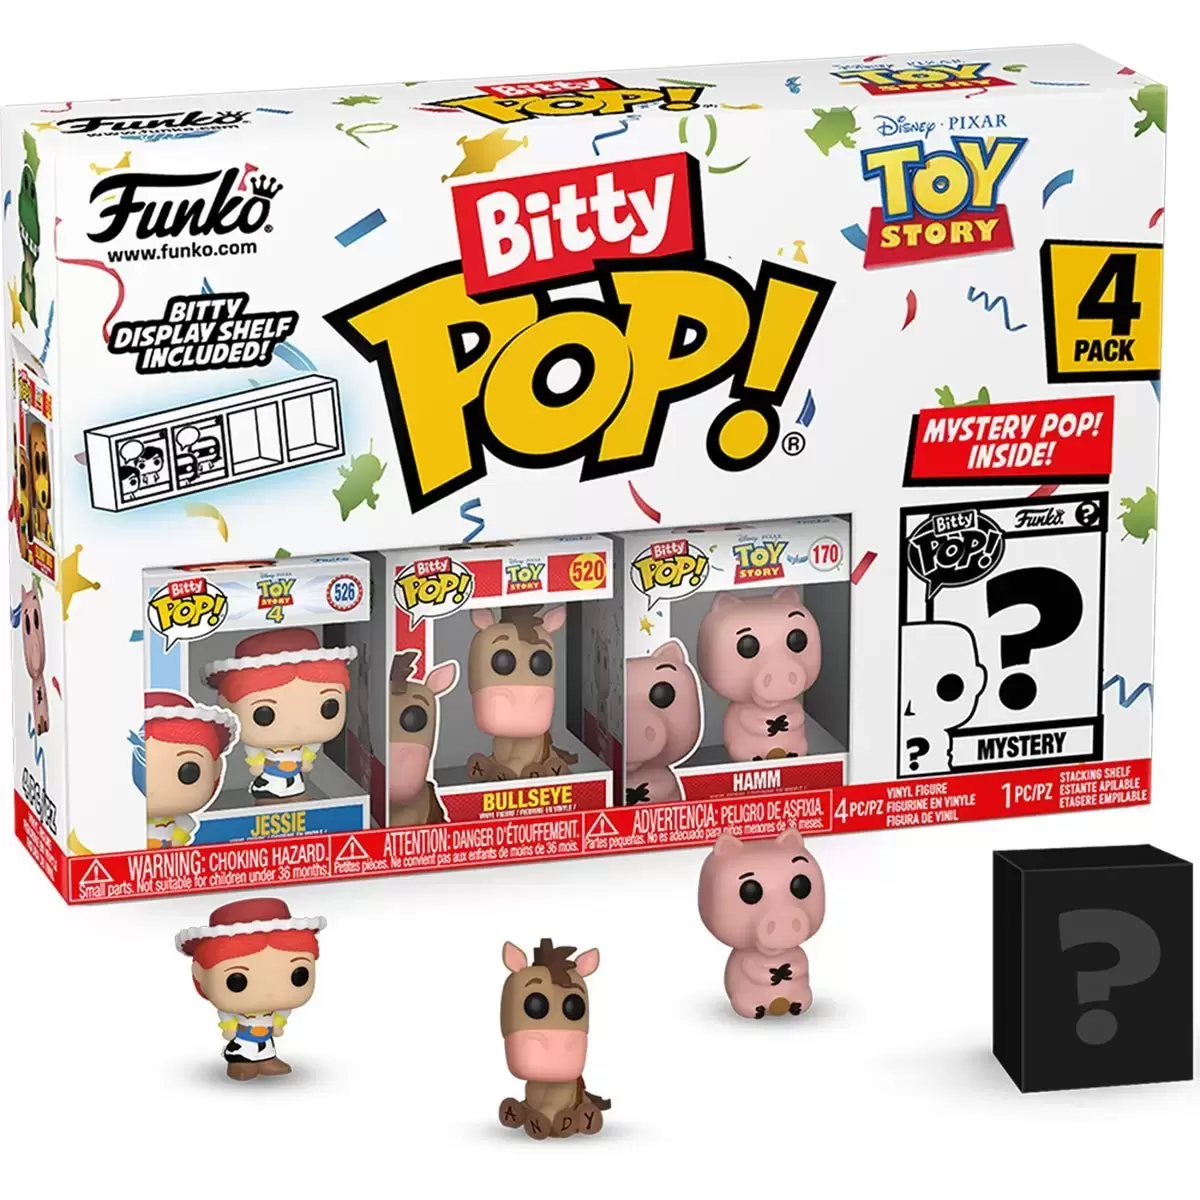 Bitty POP! - Toy Story - Jessie, Bullseye, Hamm & Mystery